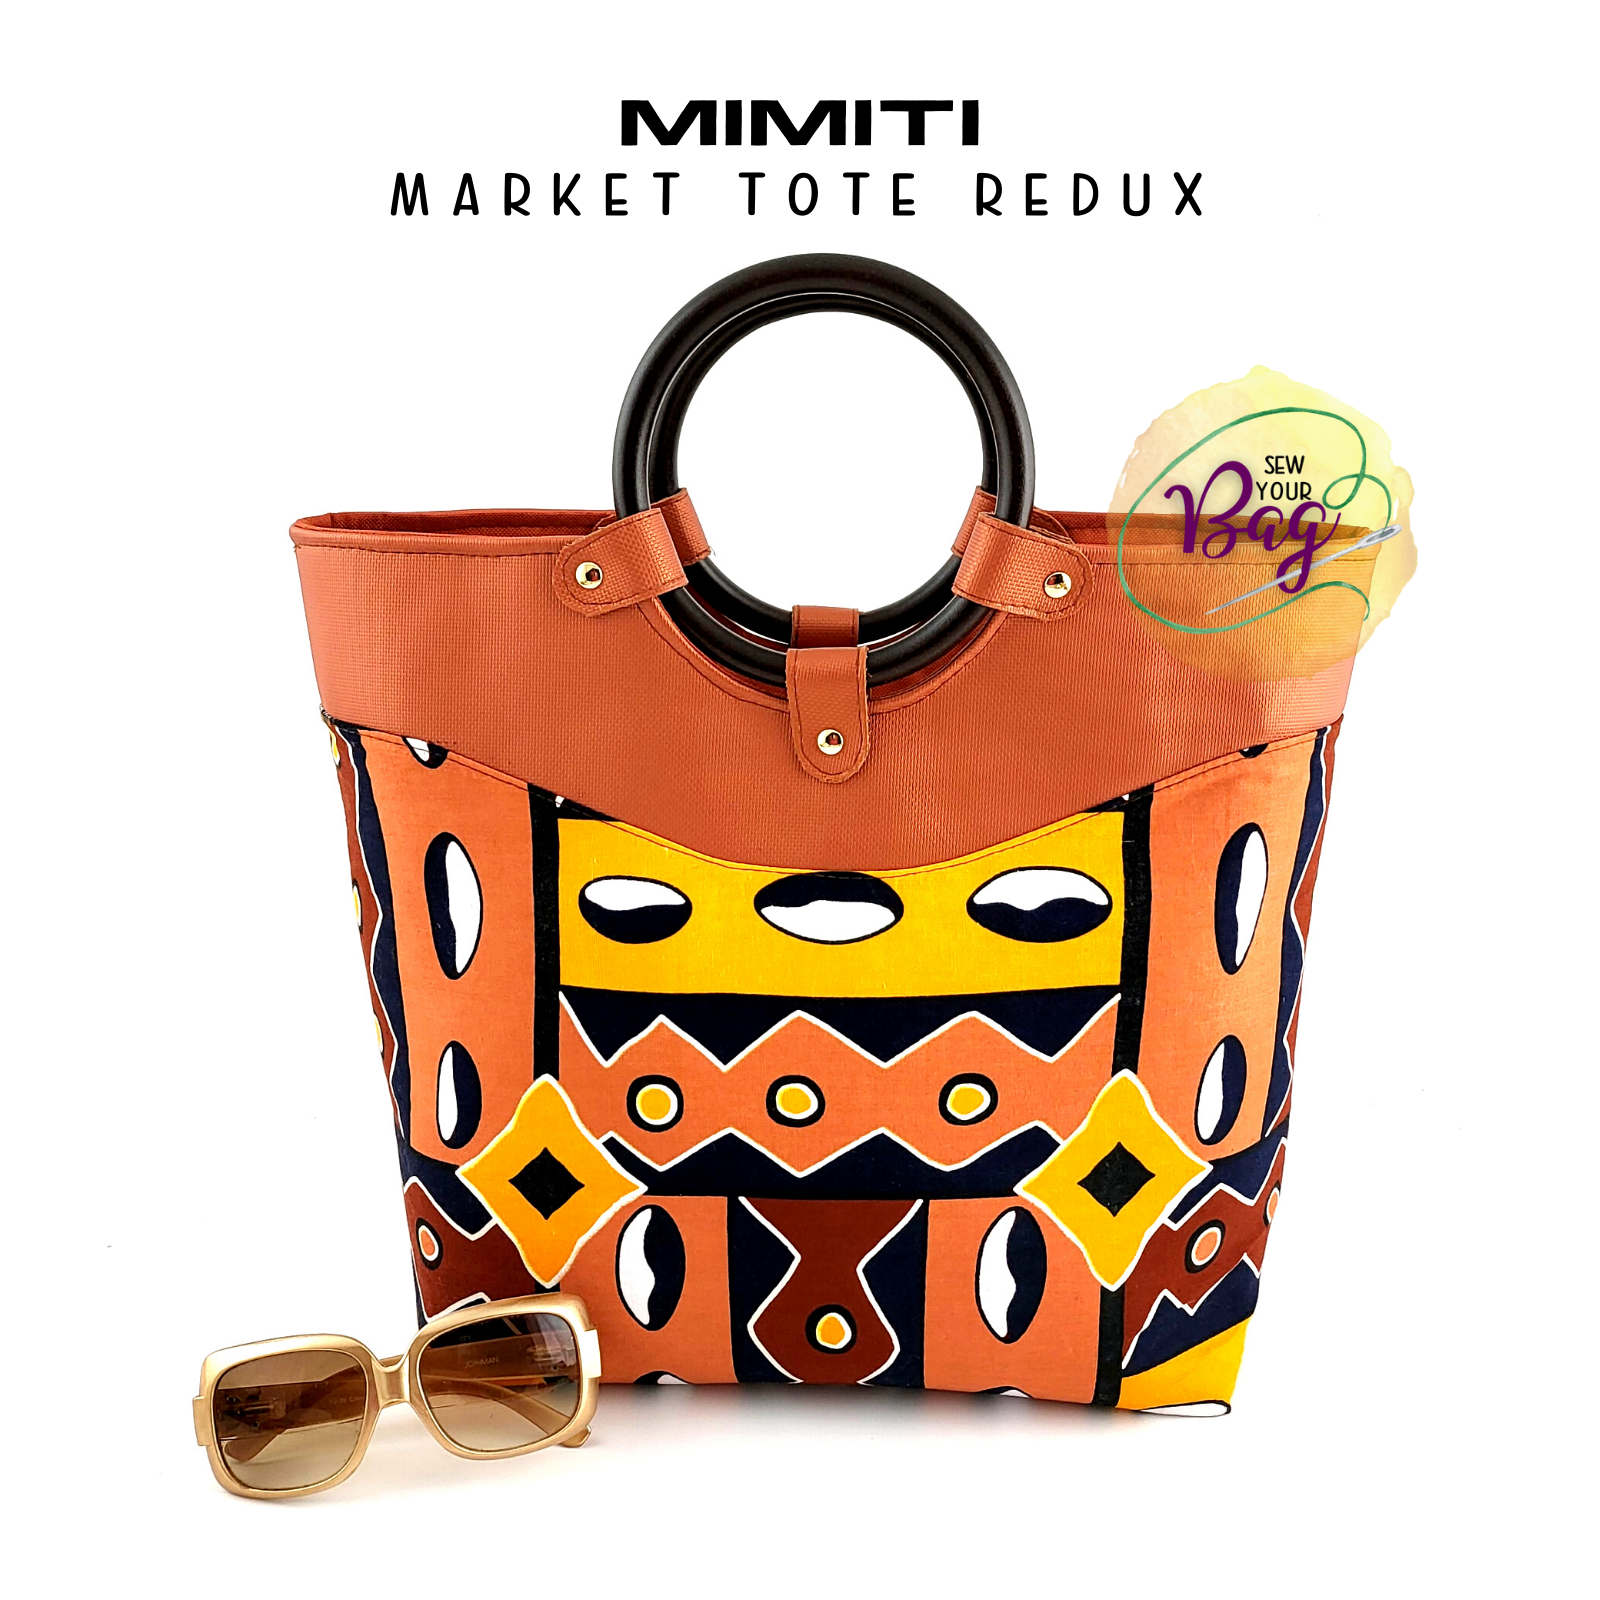 Mimiti Market Tote - Redux (MMR) » Sew Your Bag